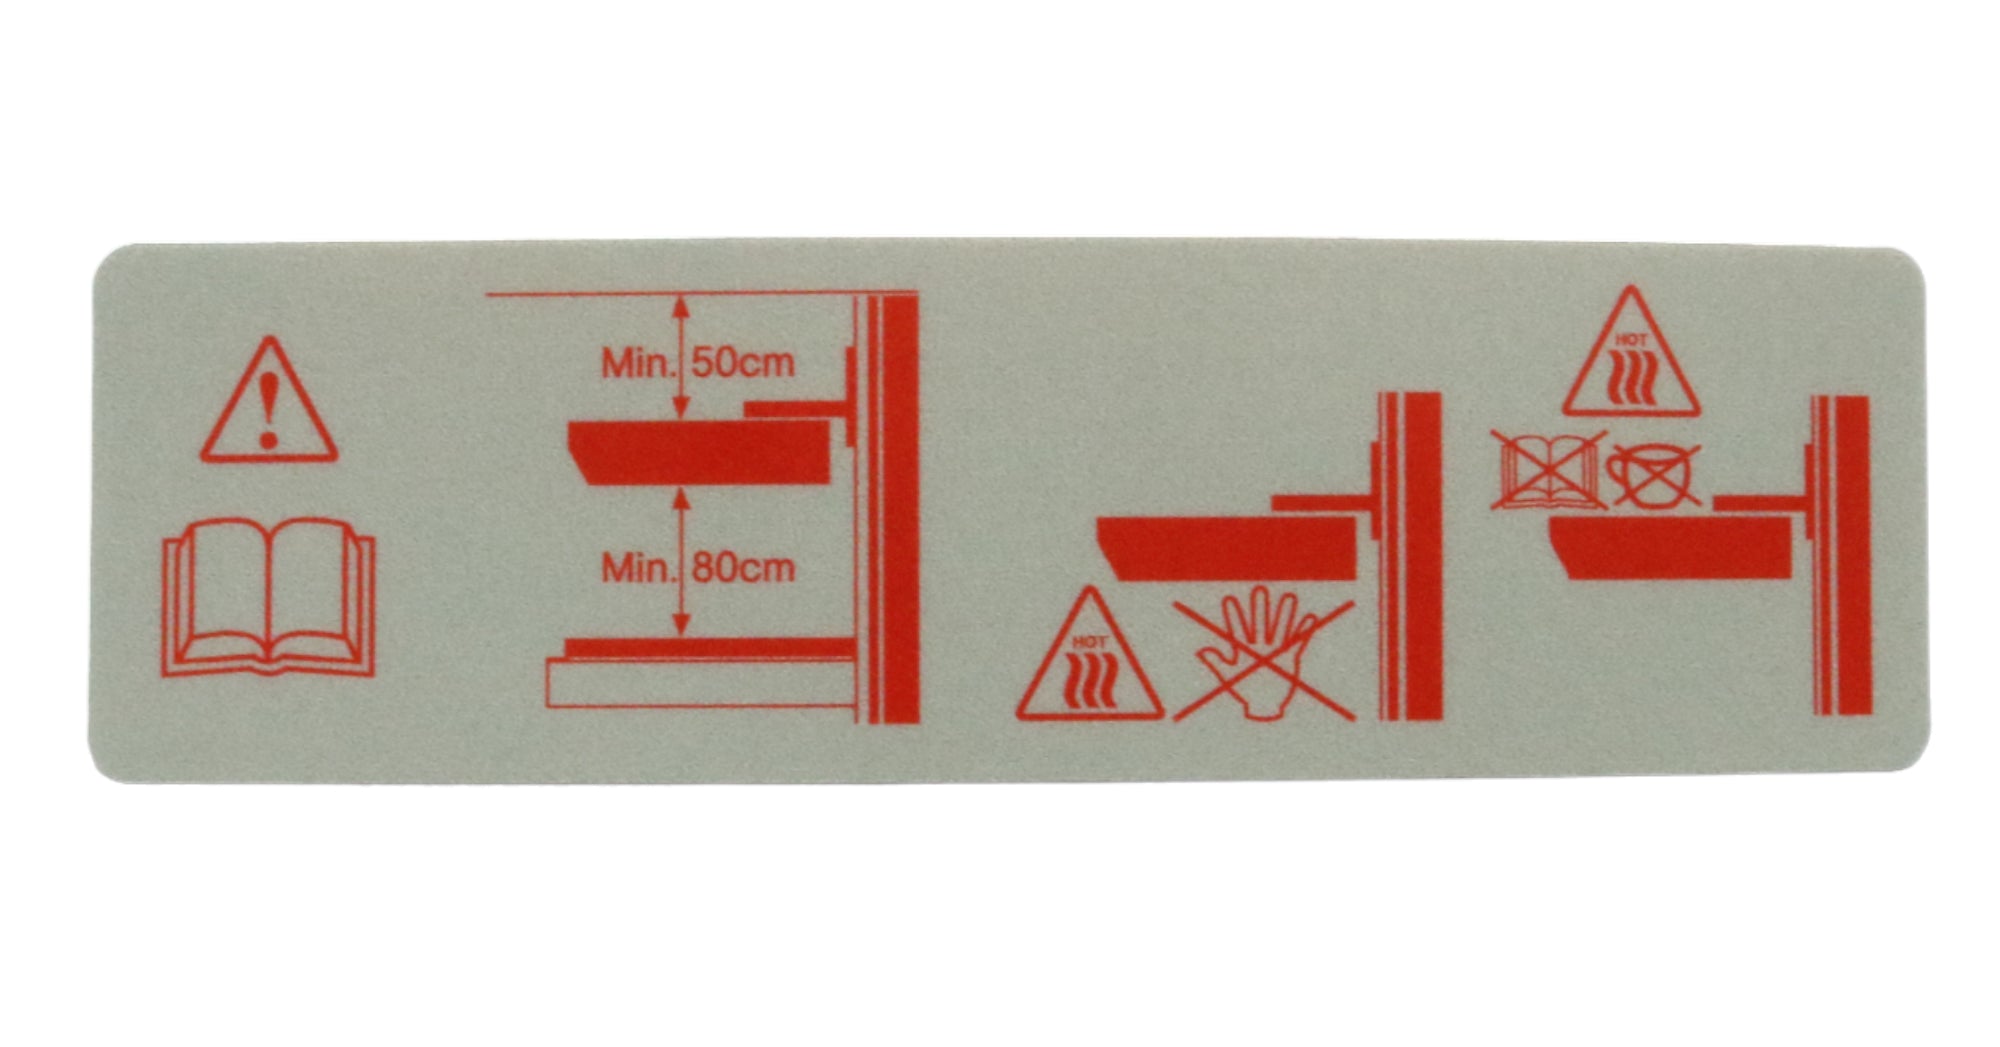 Ceratherm 600 Series Warning Label